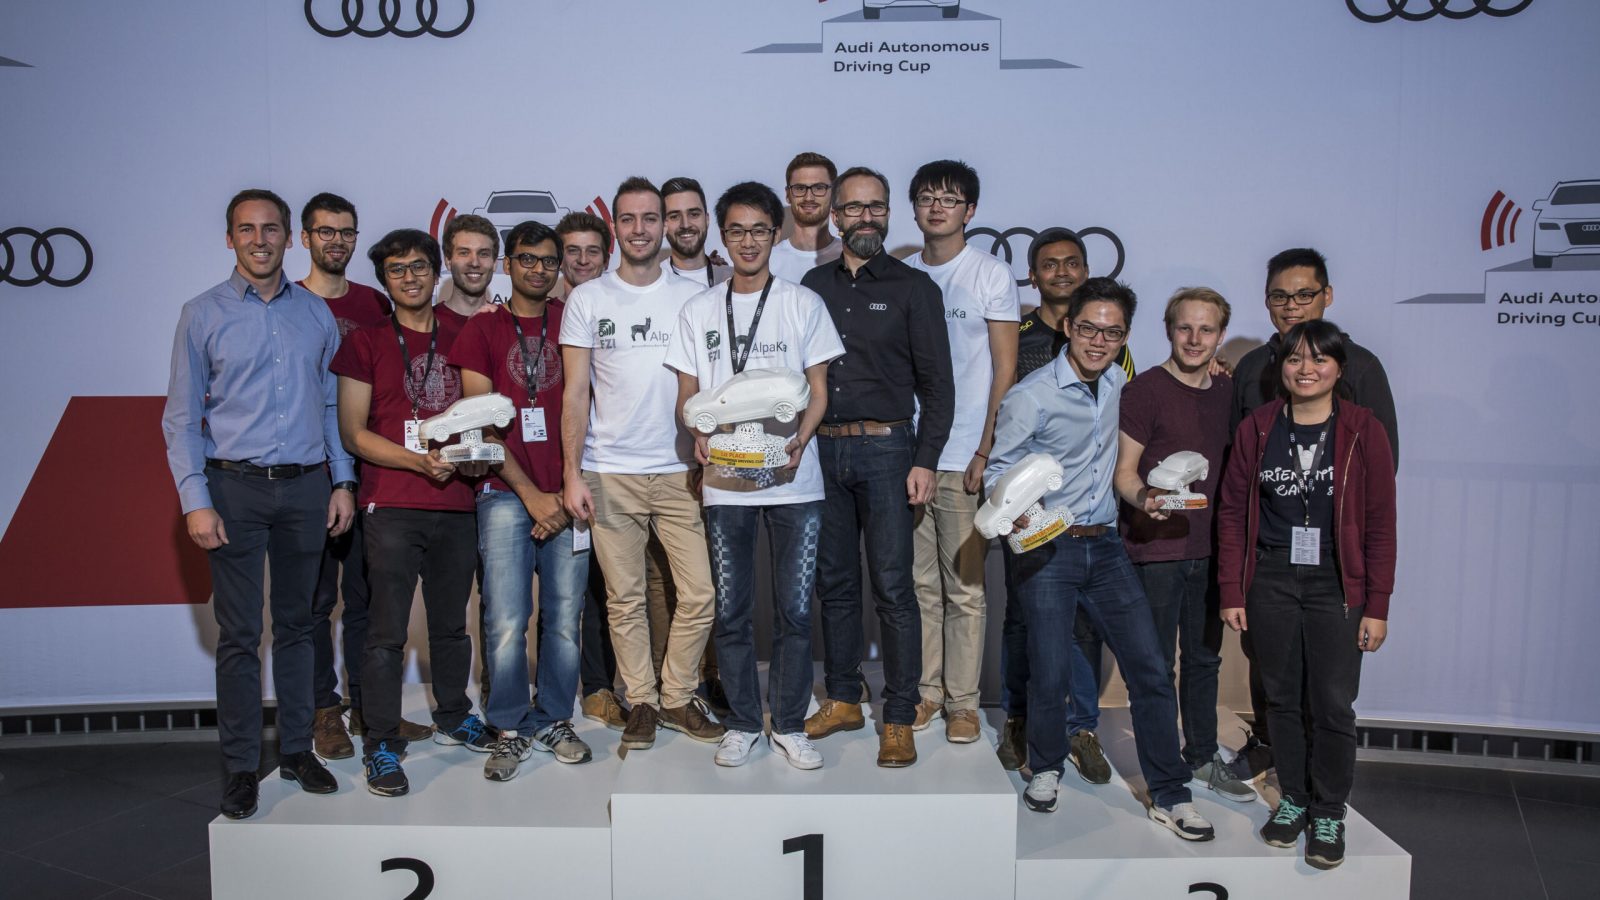 Am 14.11.2018 haben die Studenten Simon Roesler, Mark Timon Hüneberg, Yimeng Zhu, Maximilian Zipfl und Shuxiao Ding des Team AlpaKa mit Unterstützung durch das FZI den Audi Autonomous Driving Cup 2018 gewonnen.